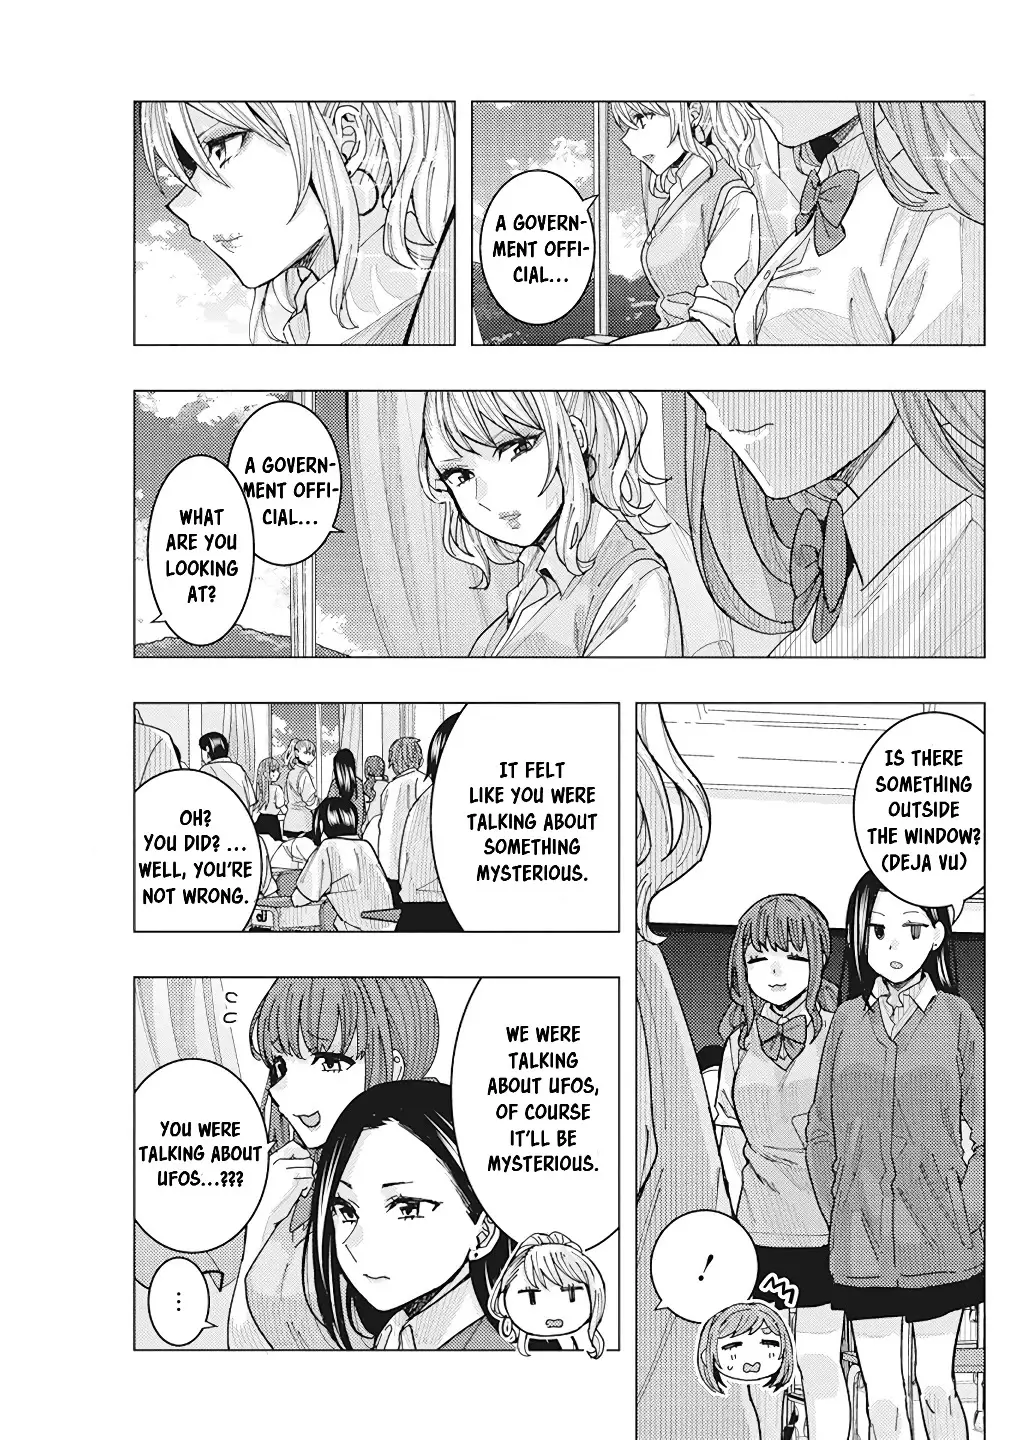 "nobukuni-San" Does She Like Me? - 17 page 10-cfde2a91